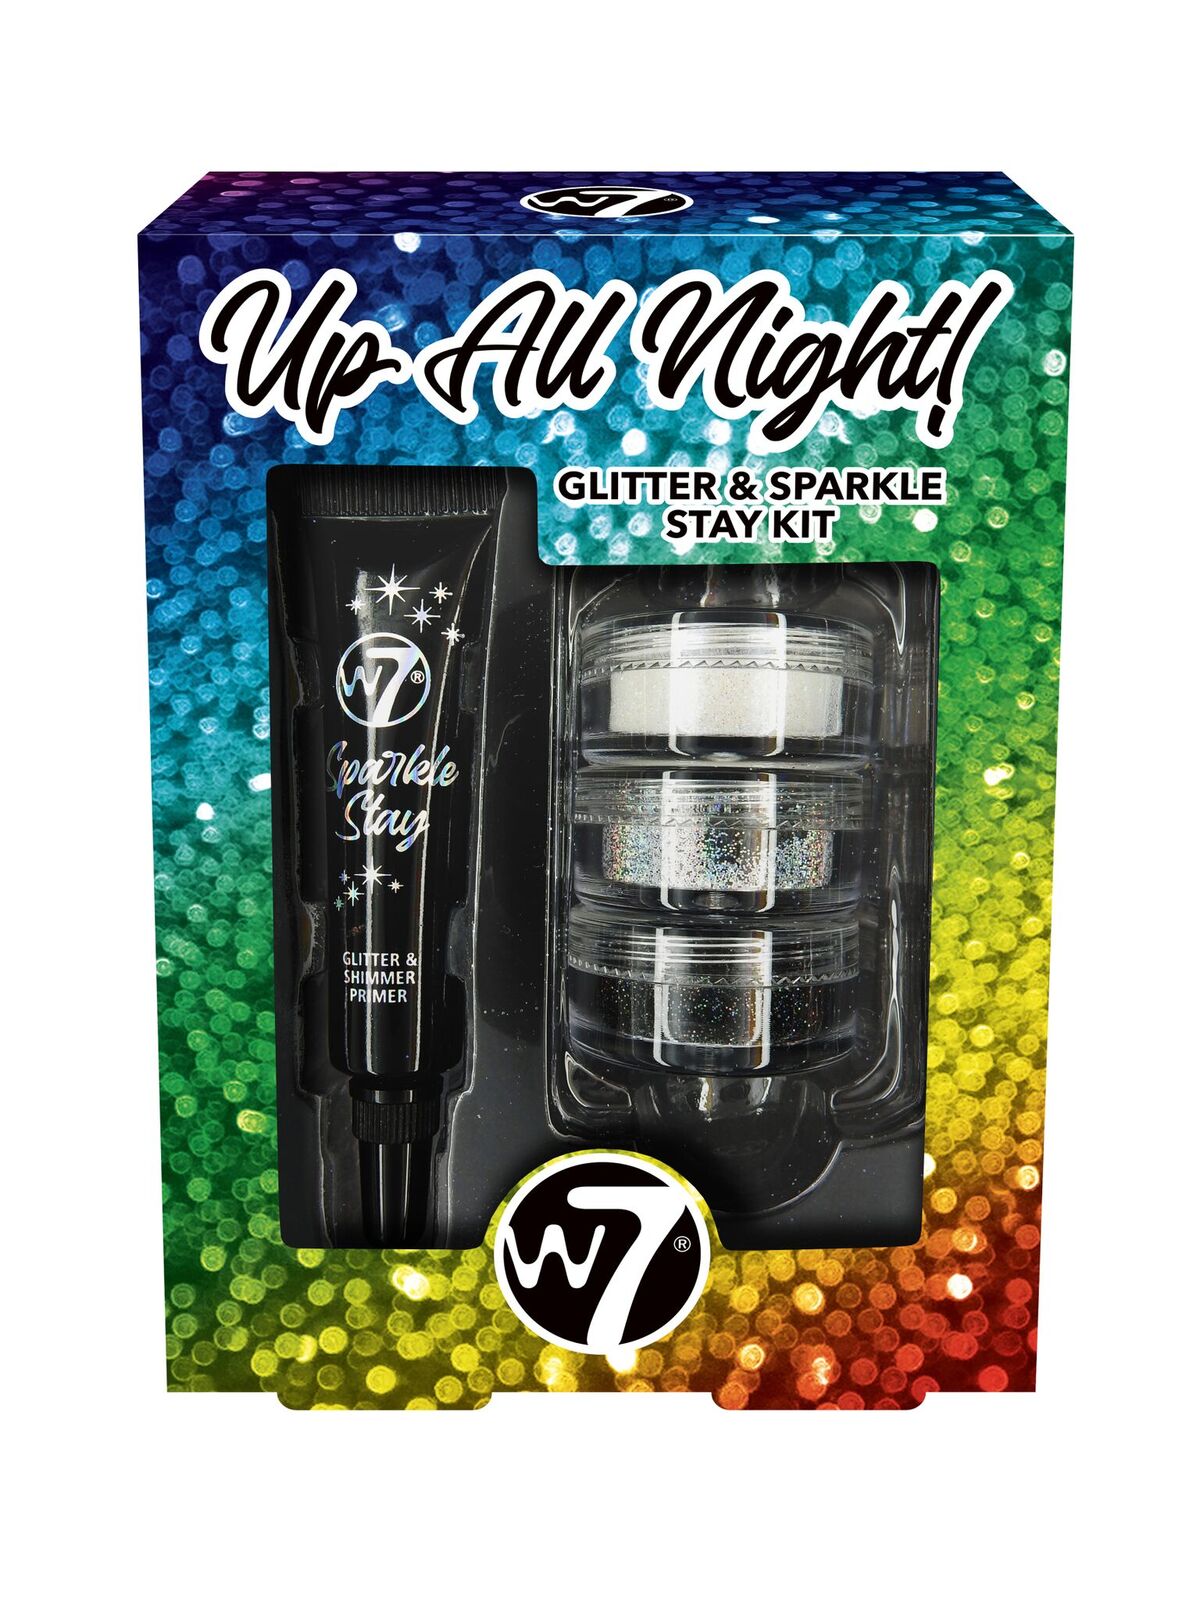 W7 Up all Night! Glitter & Sparkle Stay Kit